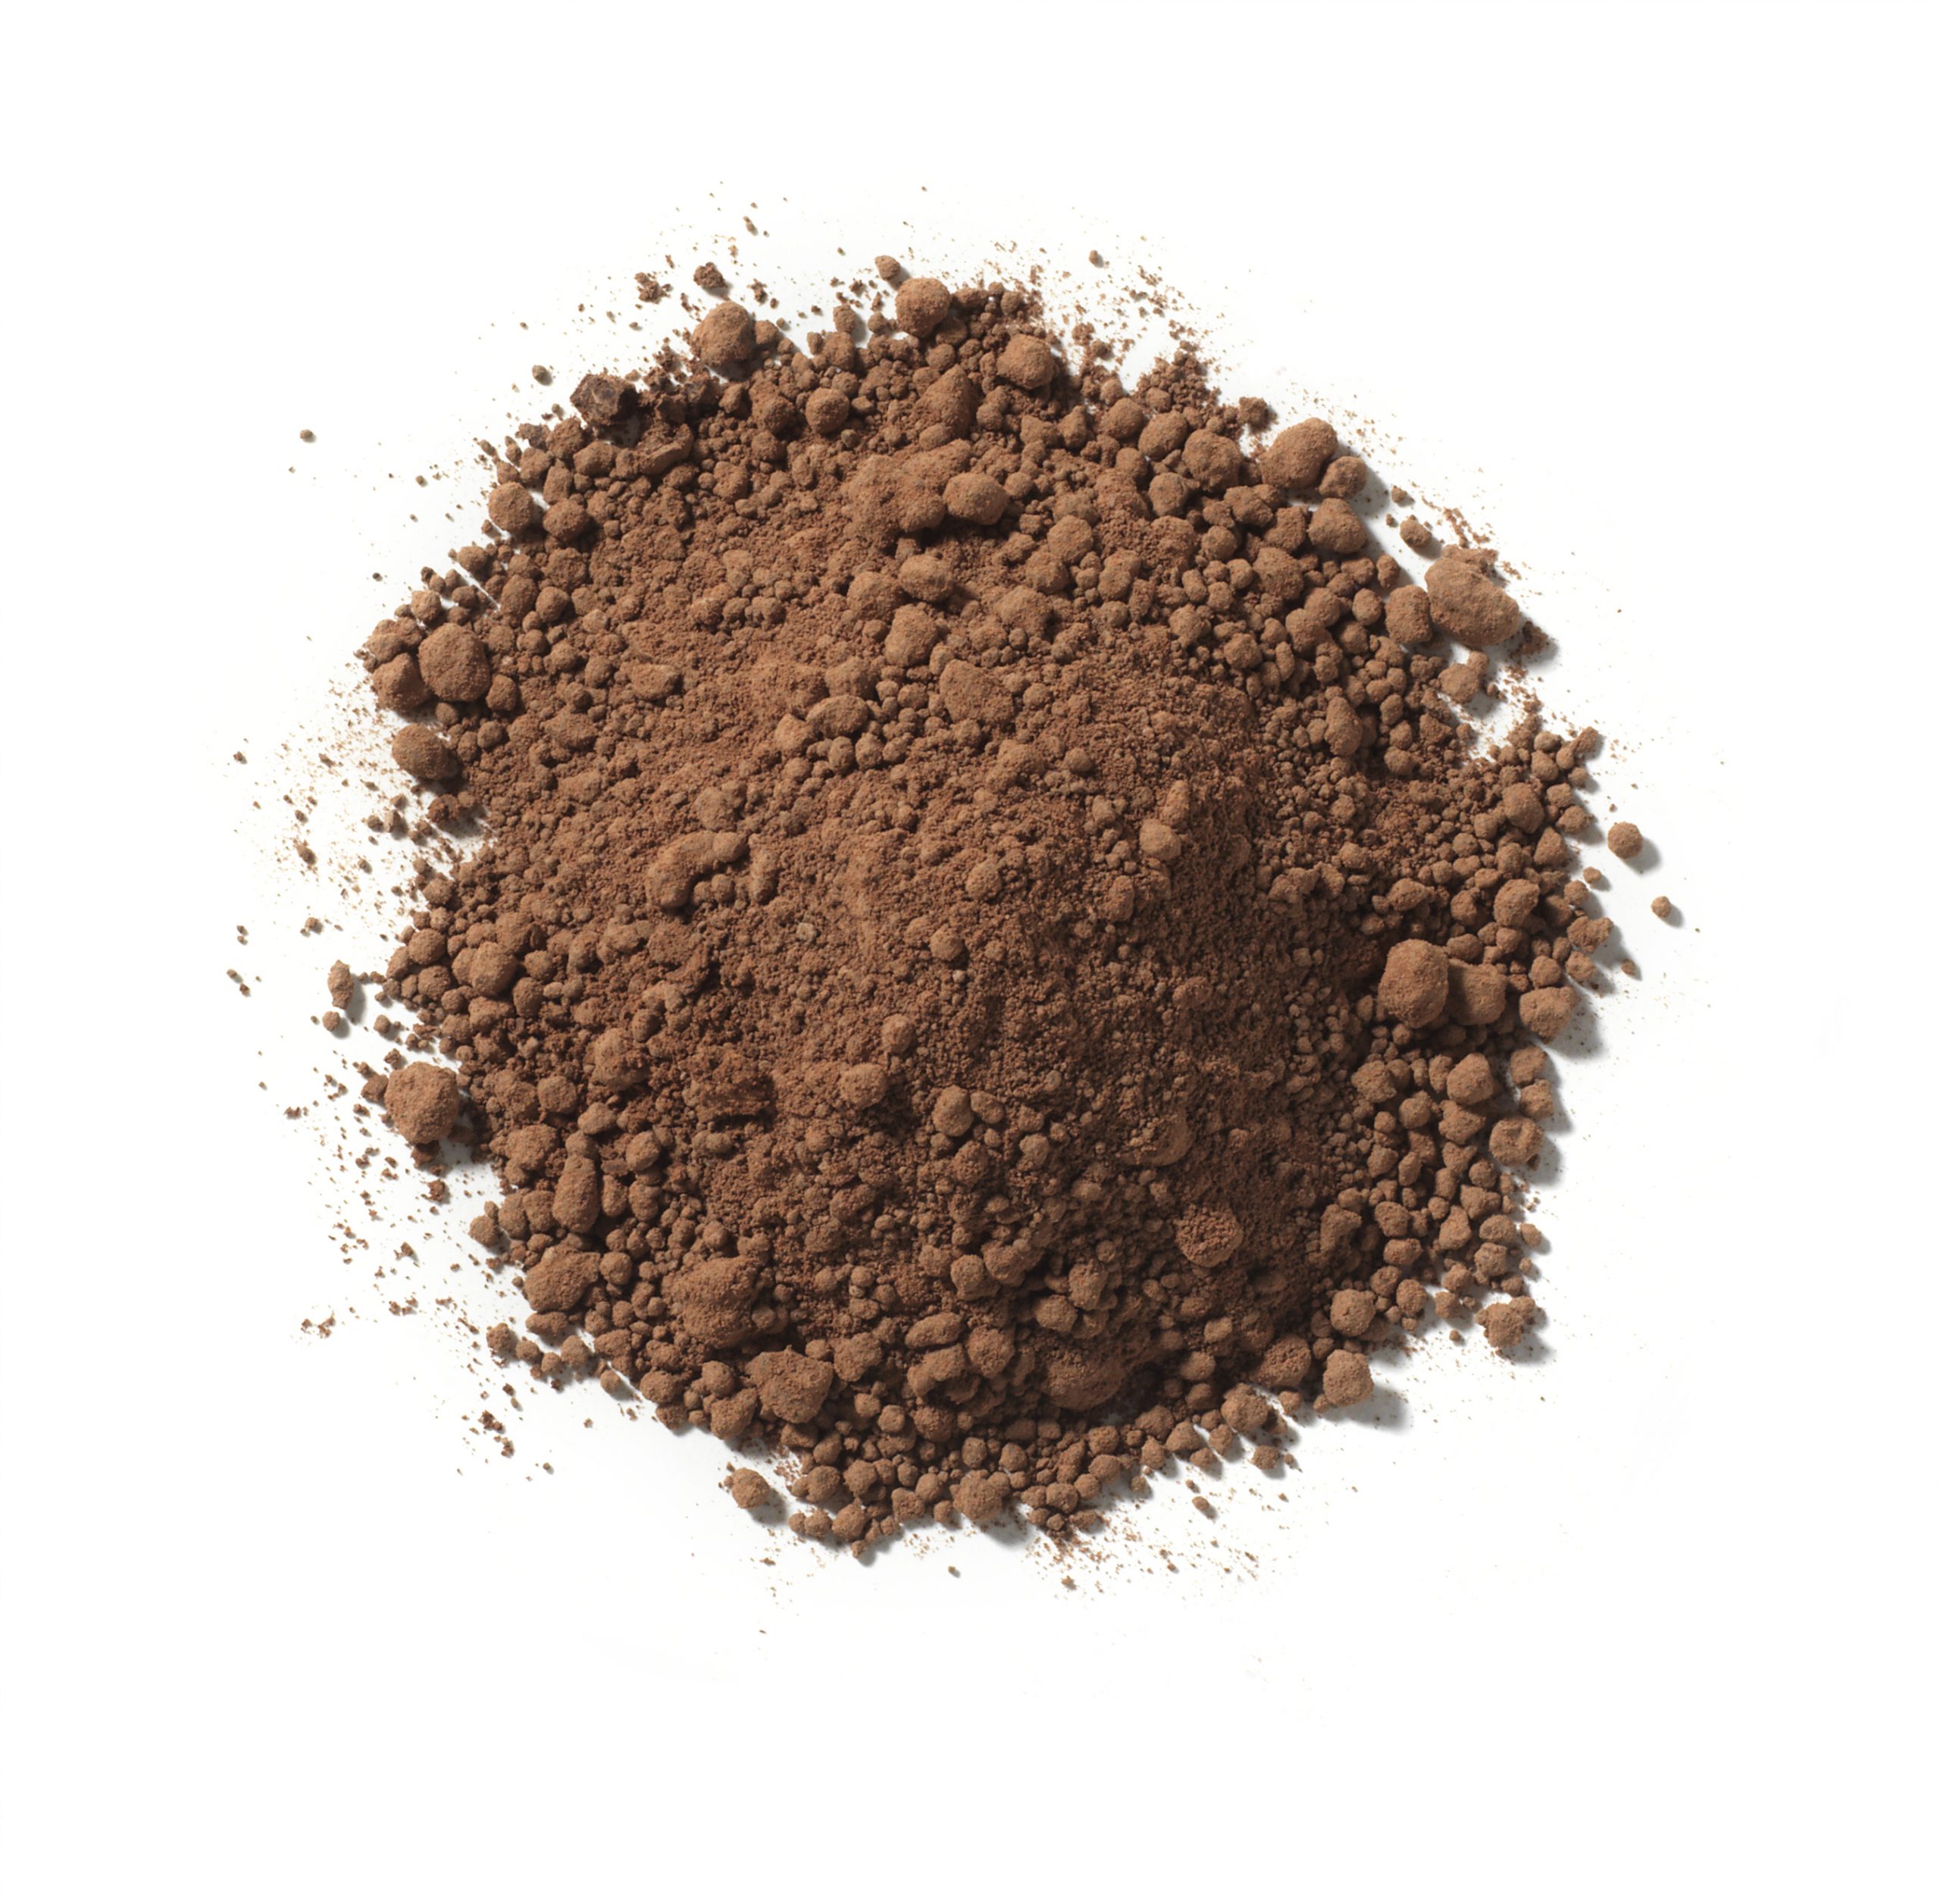 Guittard Dark/Black Cocoa Powder - 2.5 lbs